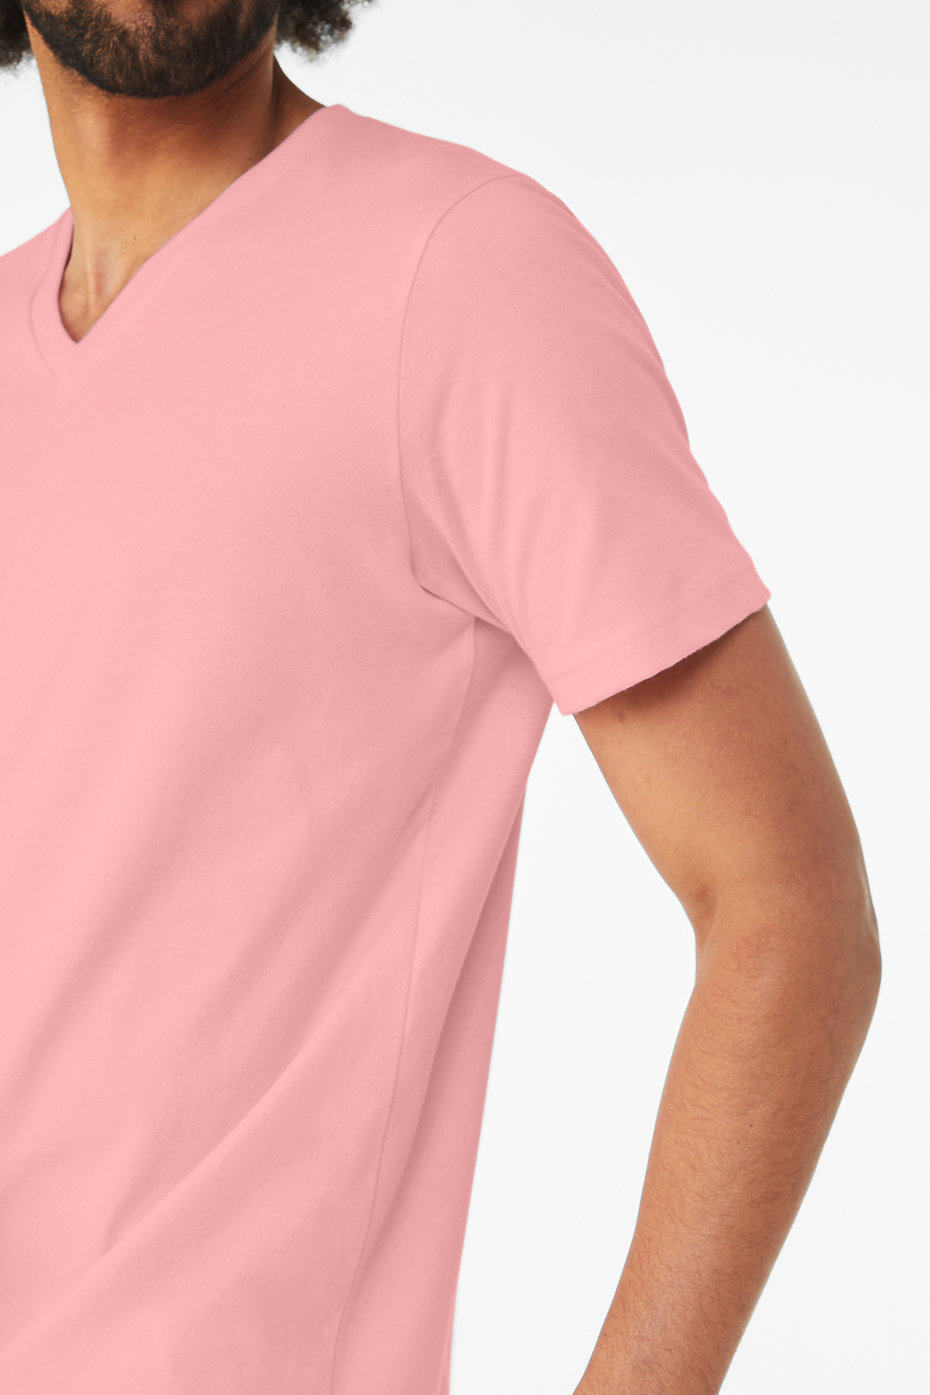 New Era Tshirt Plain Round neck shirt Premium Quality Logo